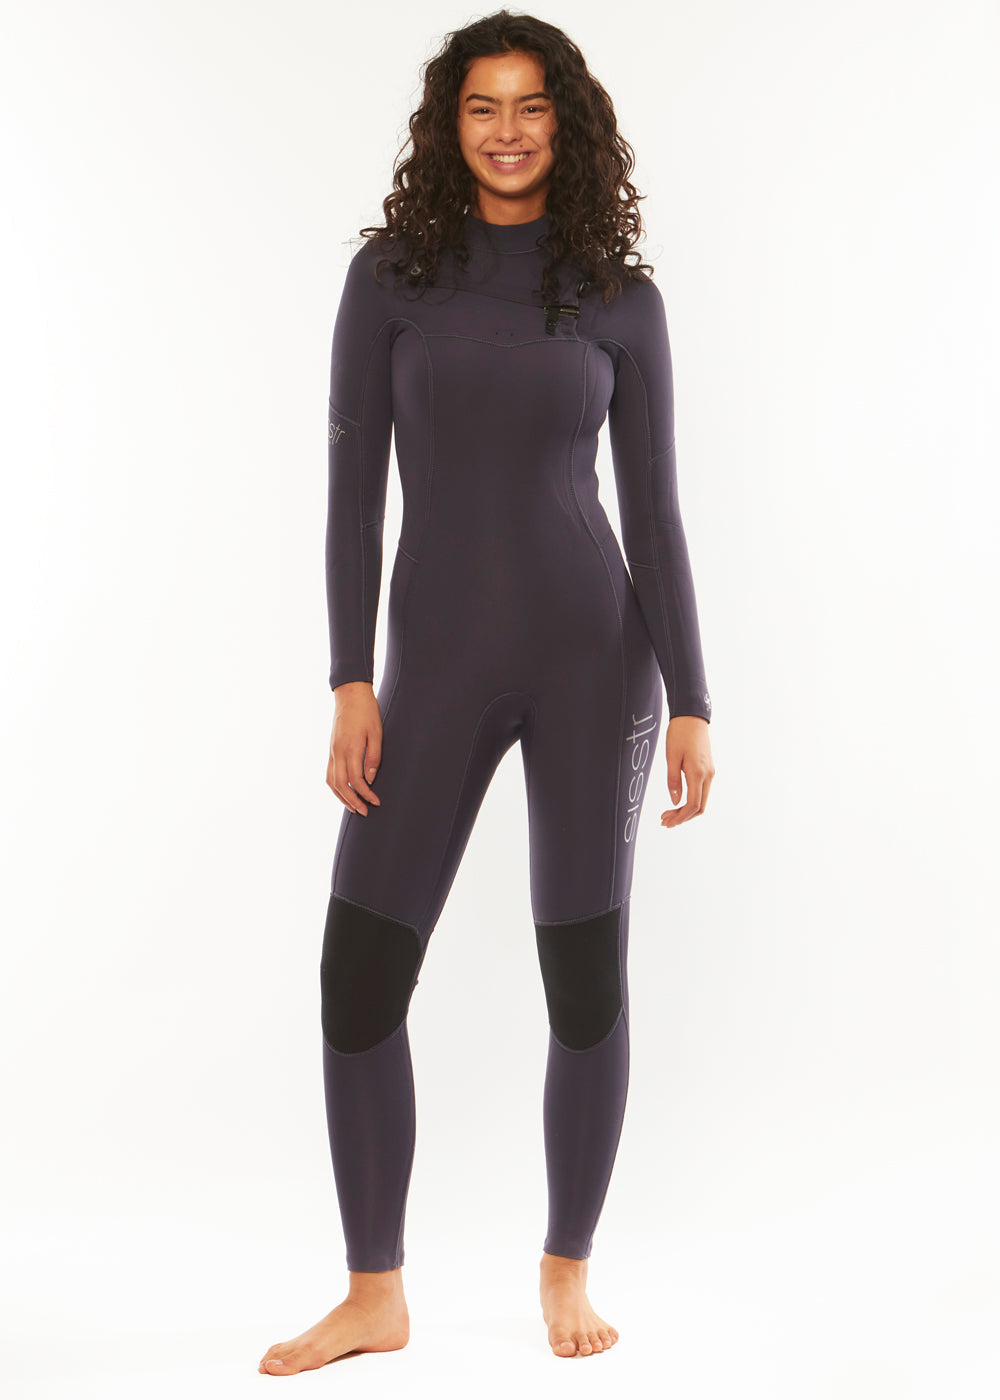 Sisstrevolution 7 seas 4/3 chest zip wetsuit - starlight